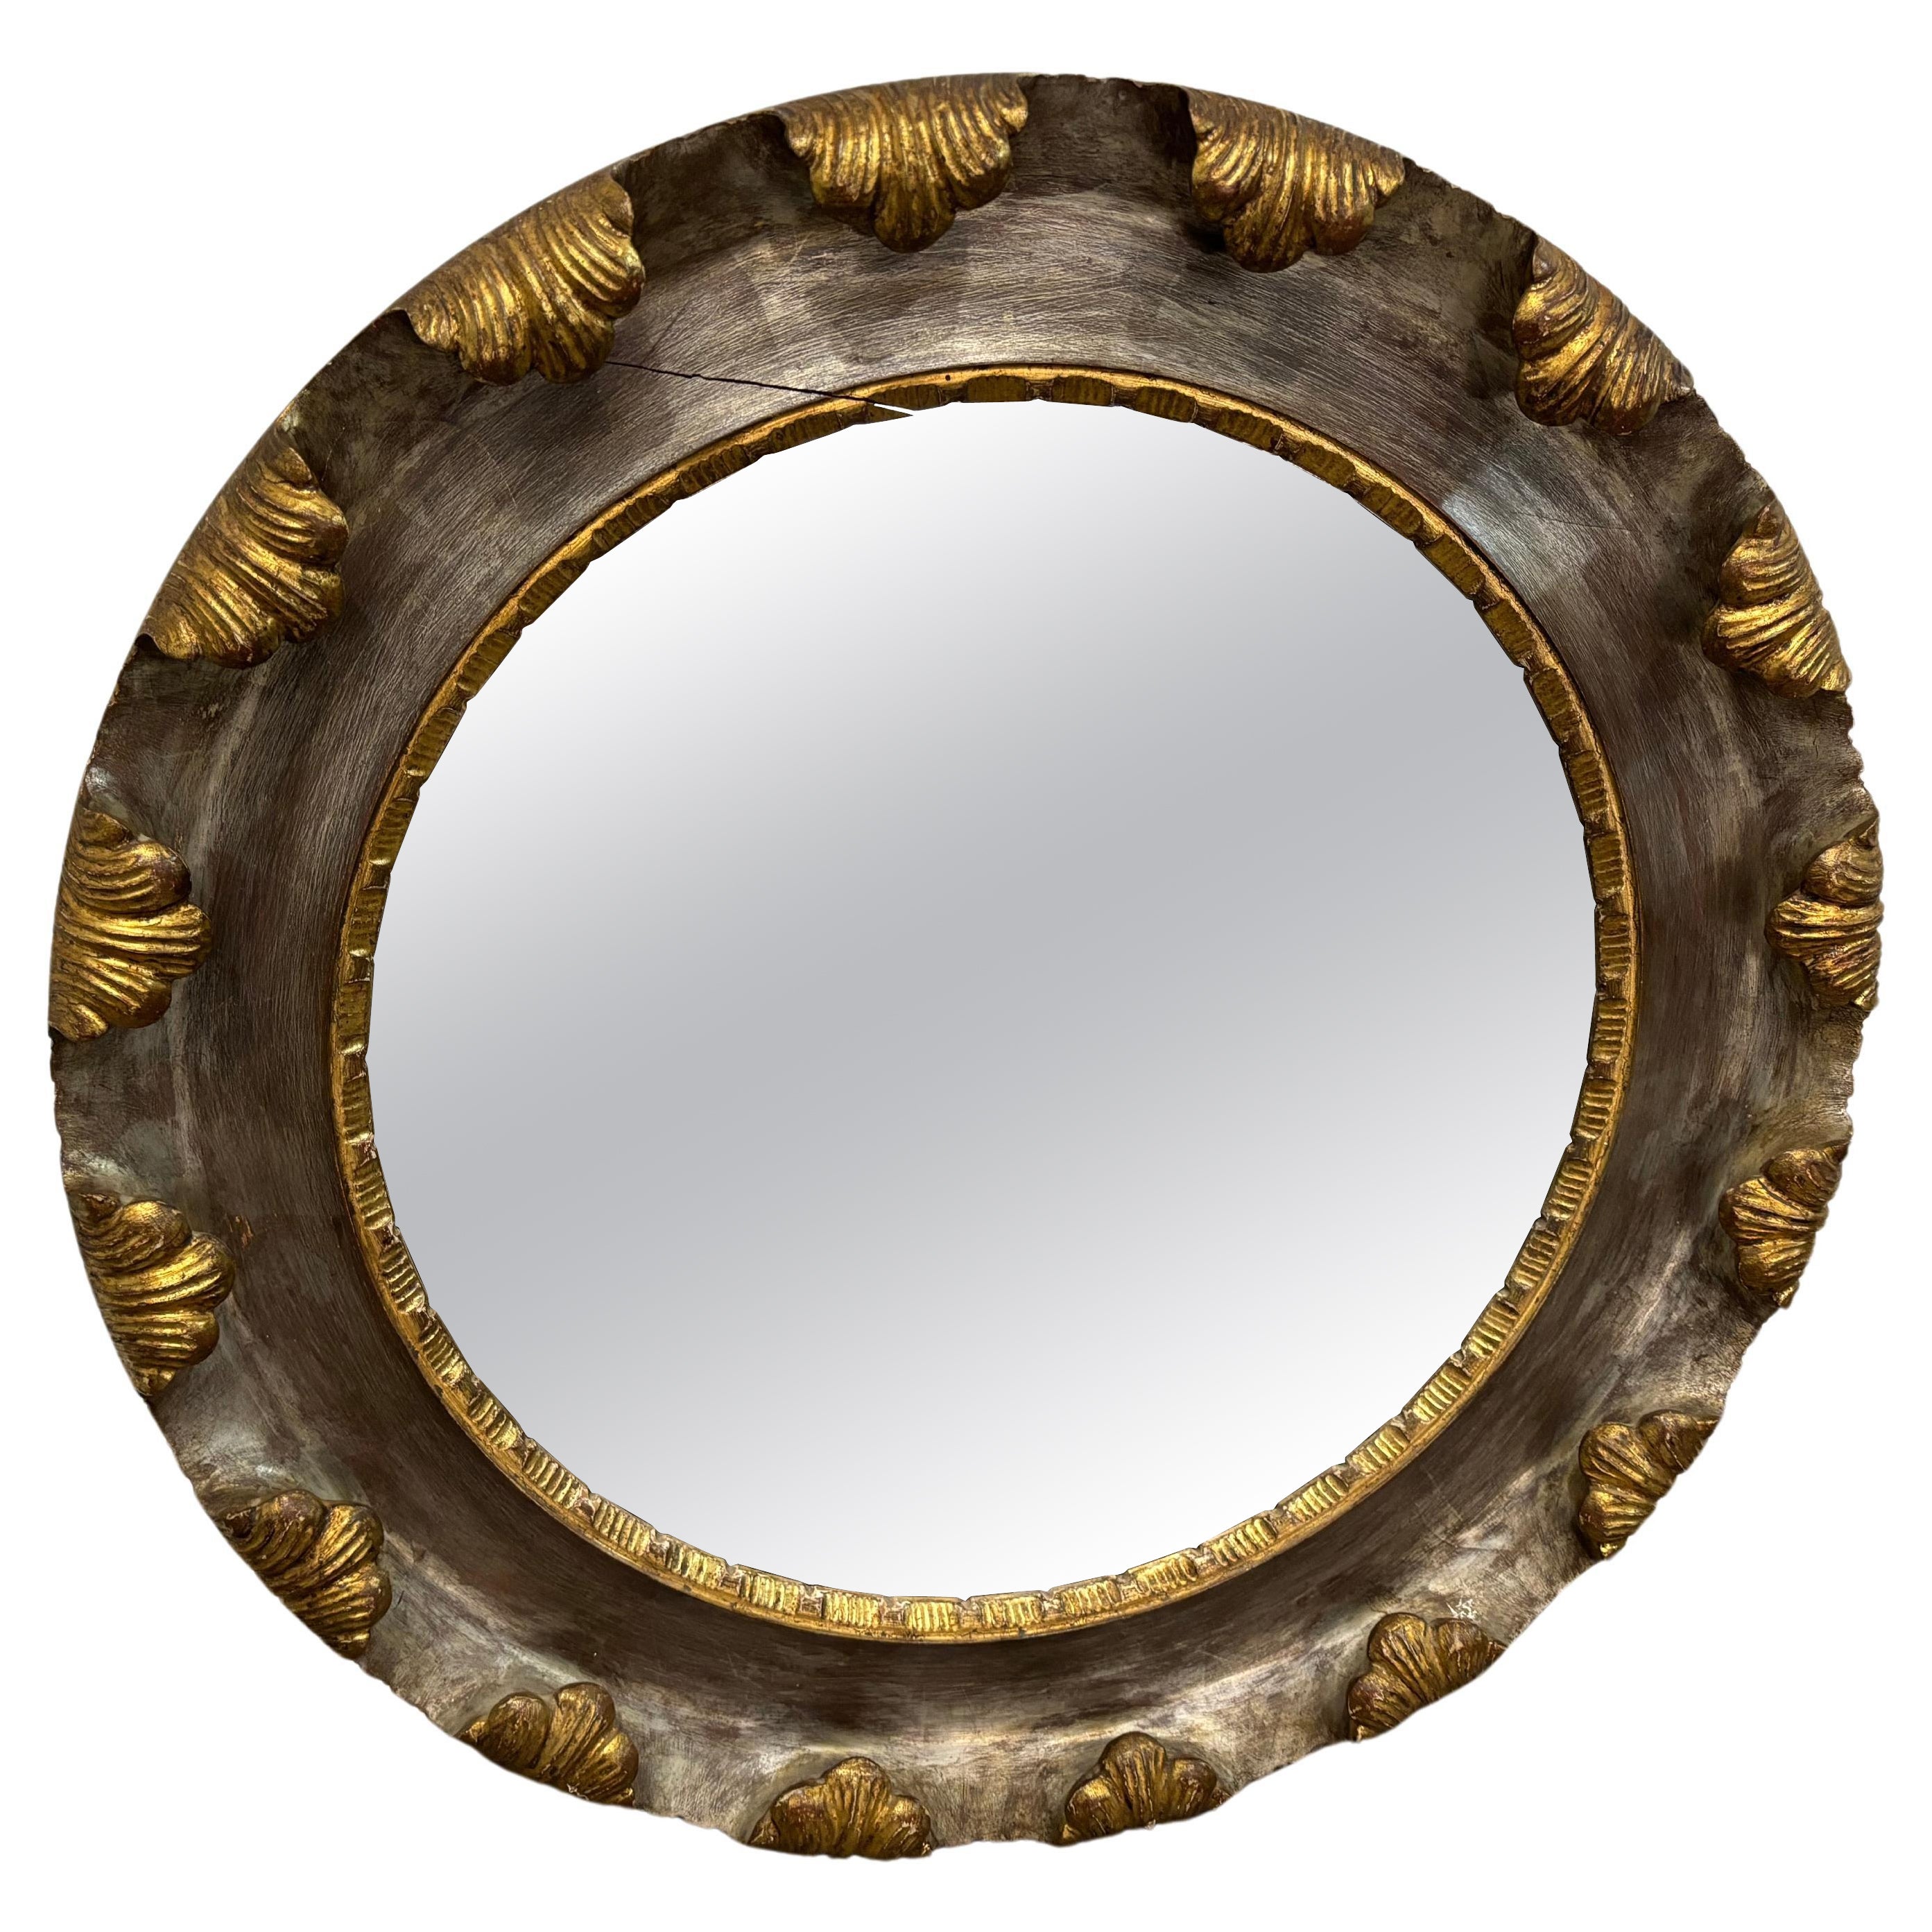 Italian Gold and Silver Sunburst Mirror